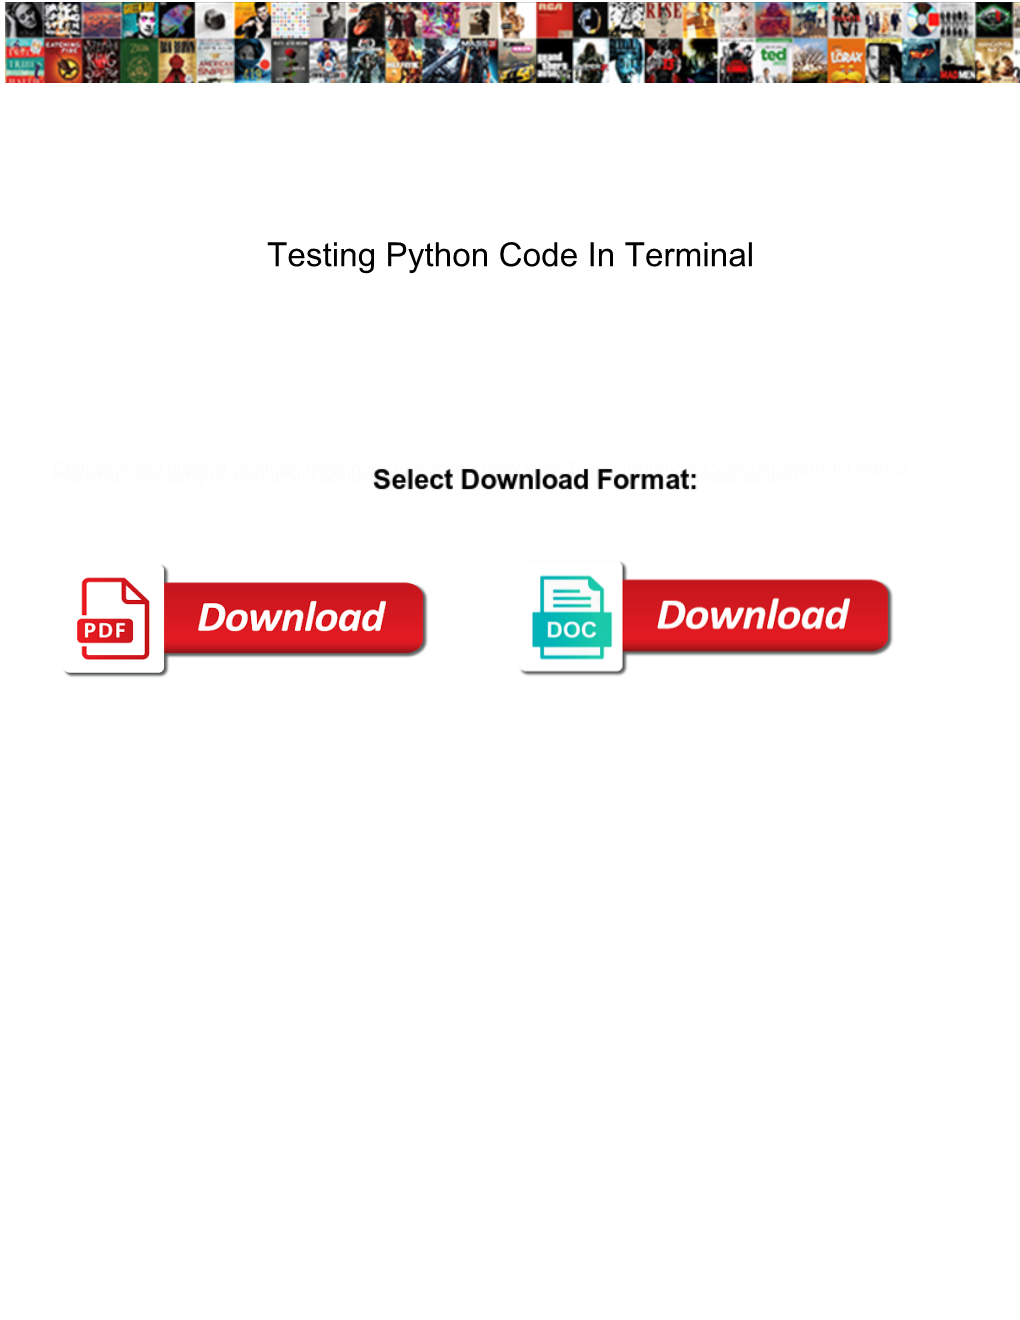 Testing Python Code in Terminal